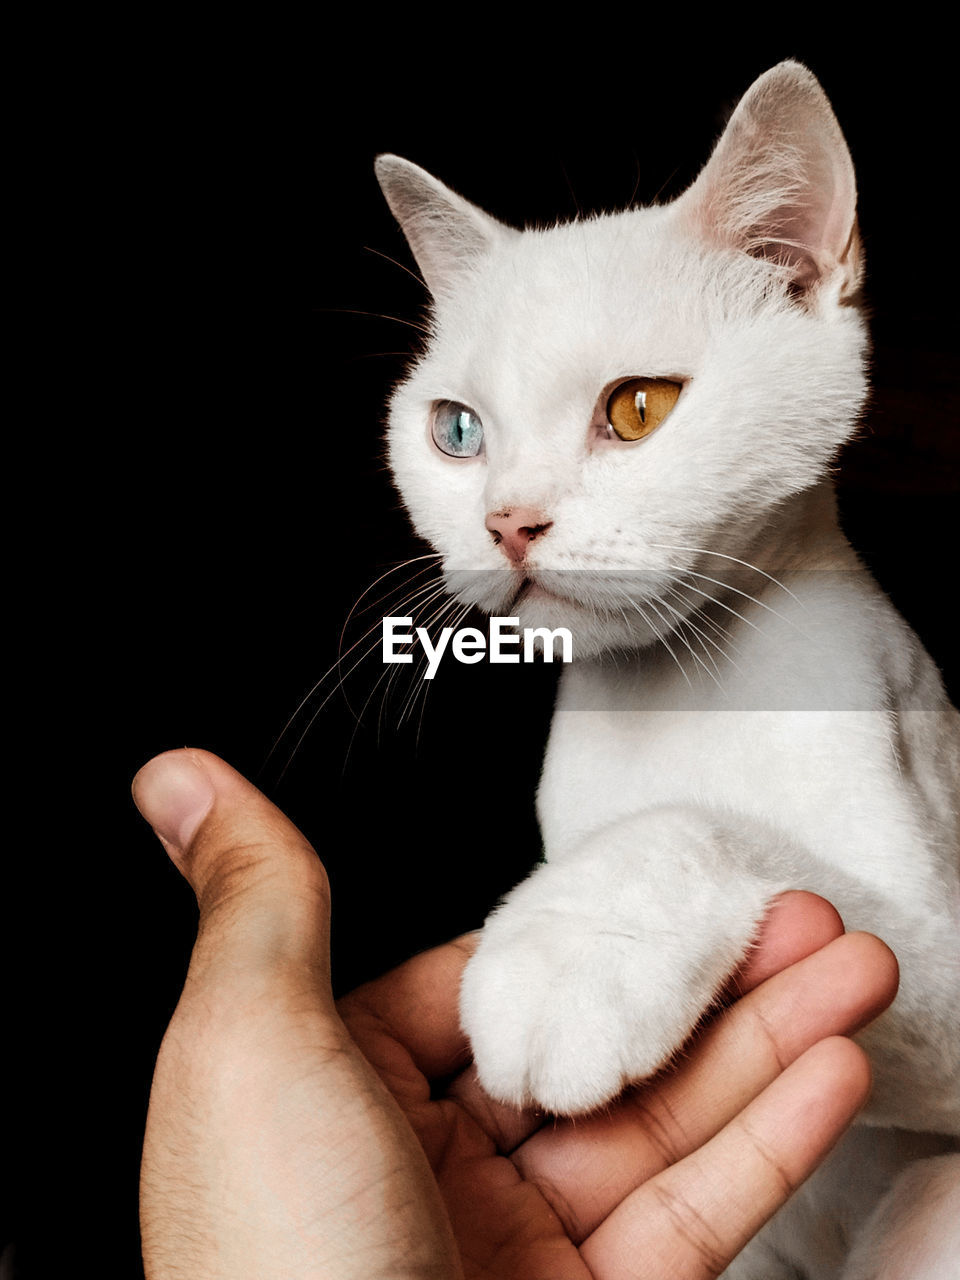 Odd eyed cat